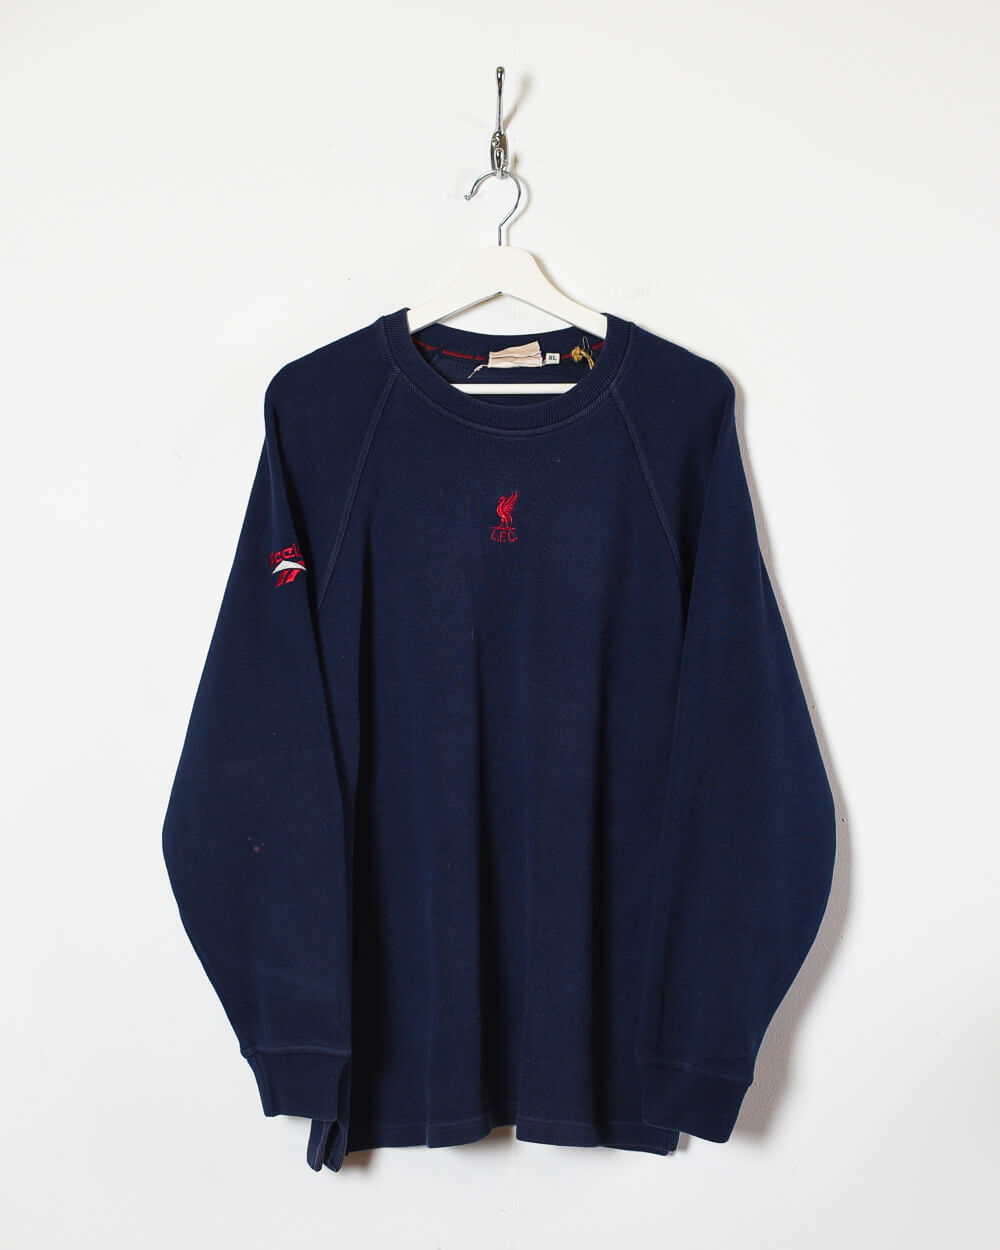 Navy Reebok 1998/99 Liverpool Sweatshirt - X-Large